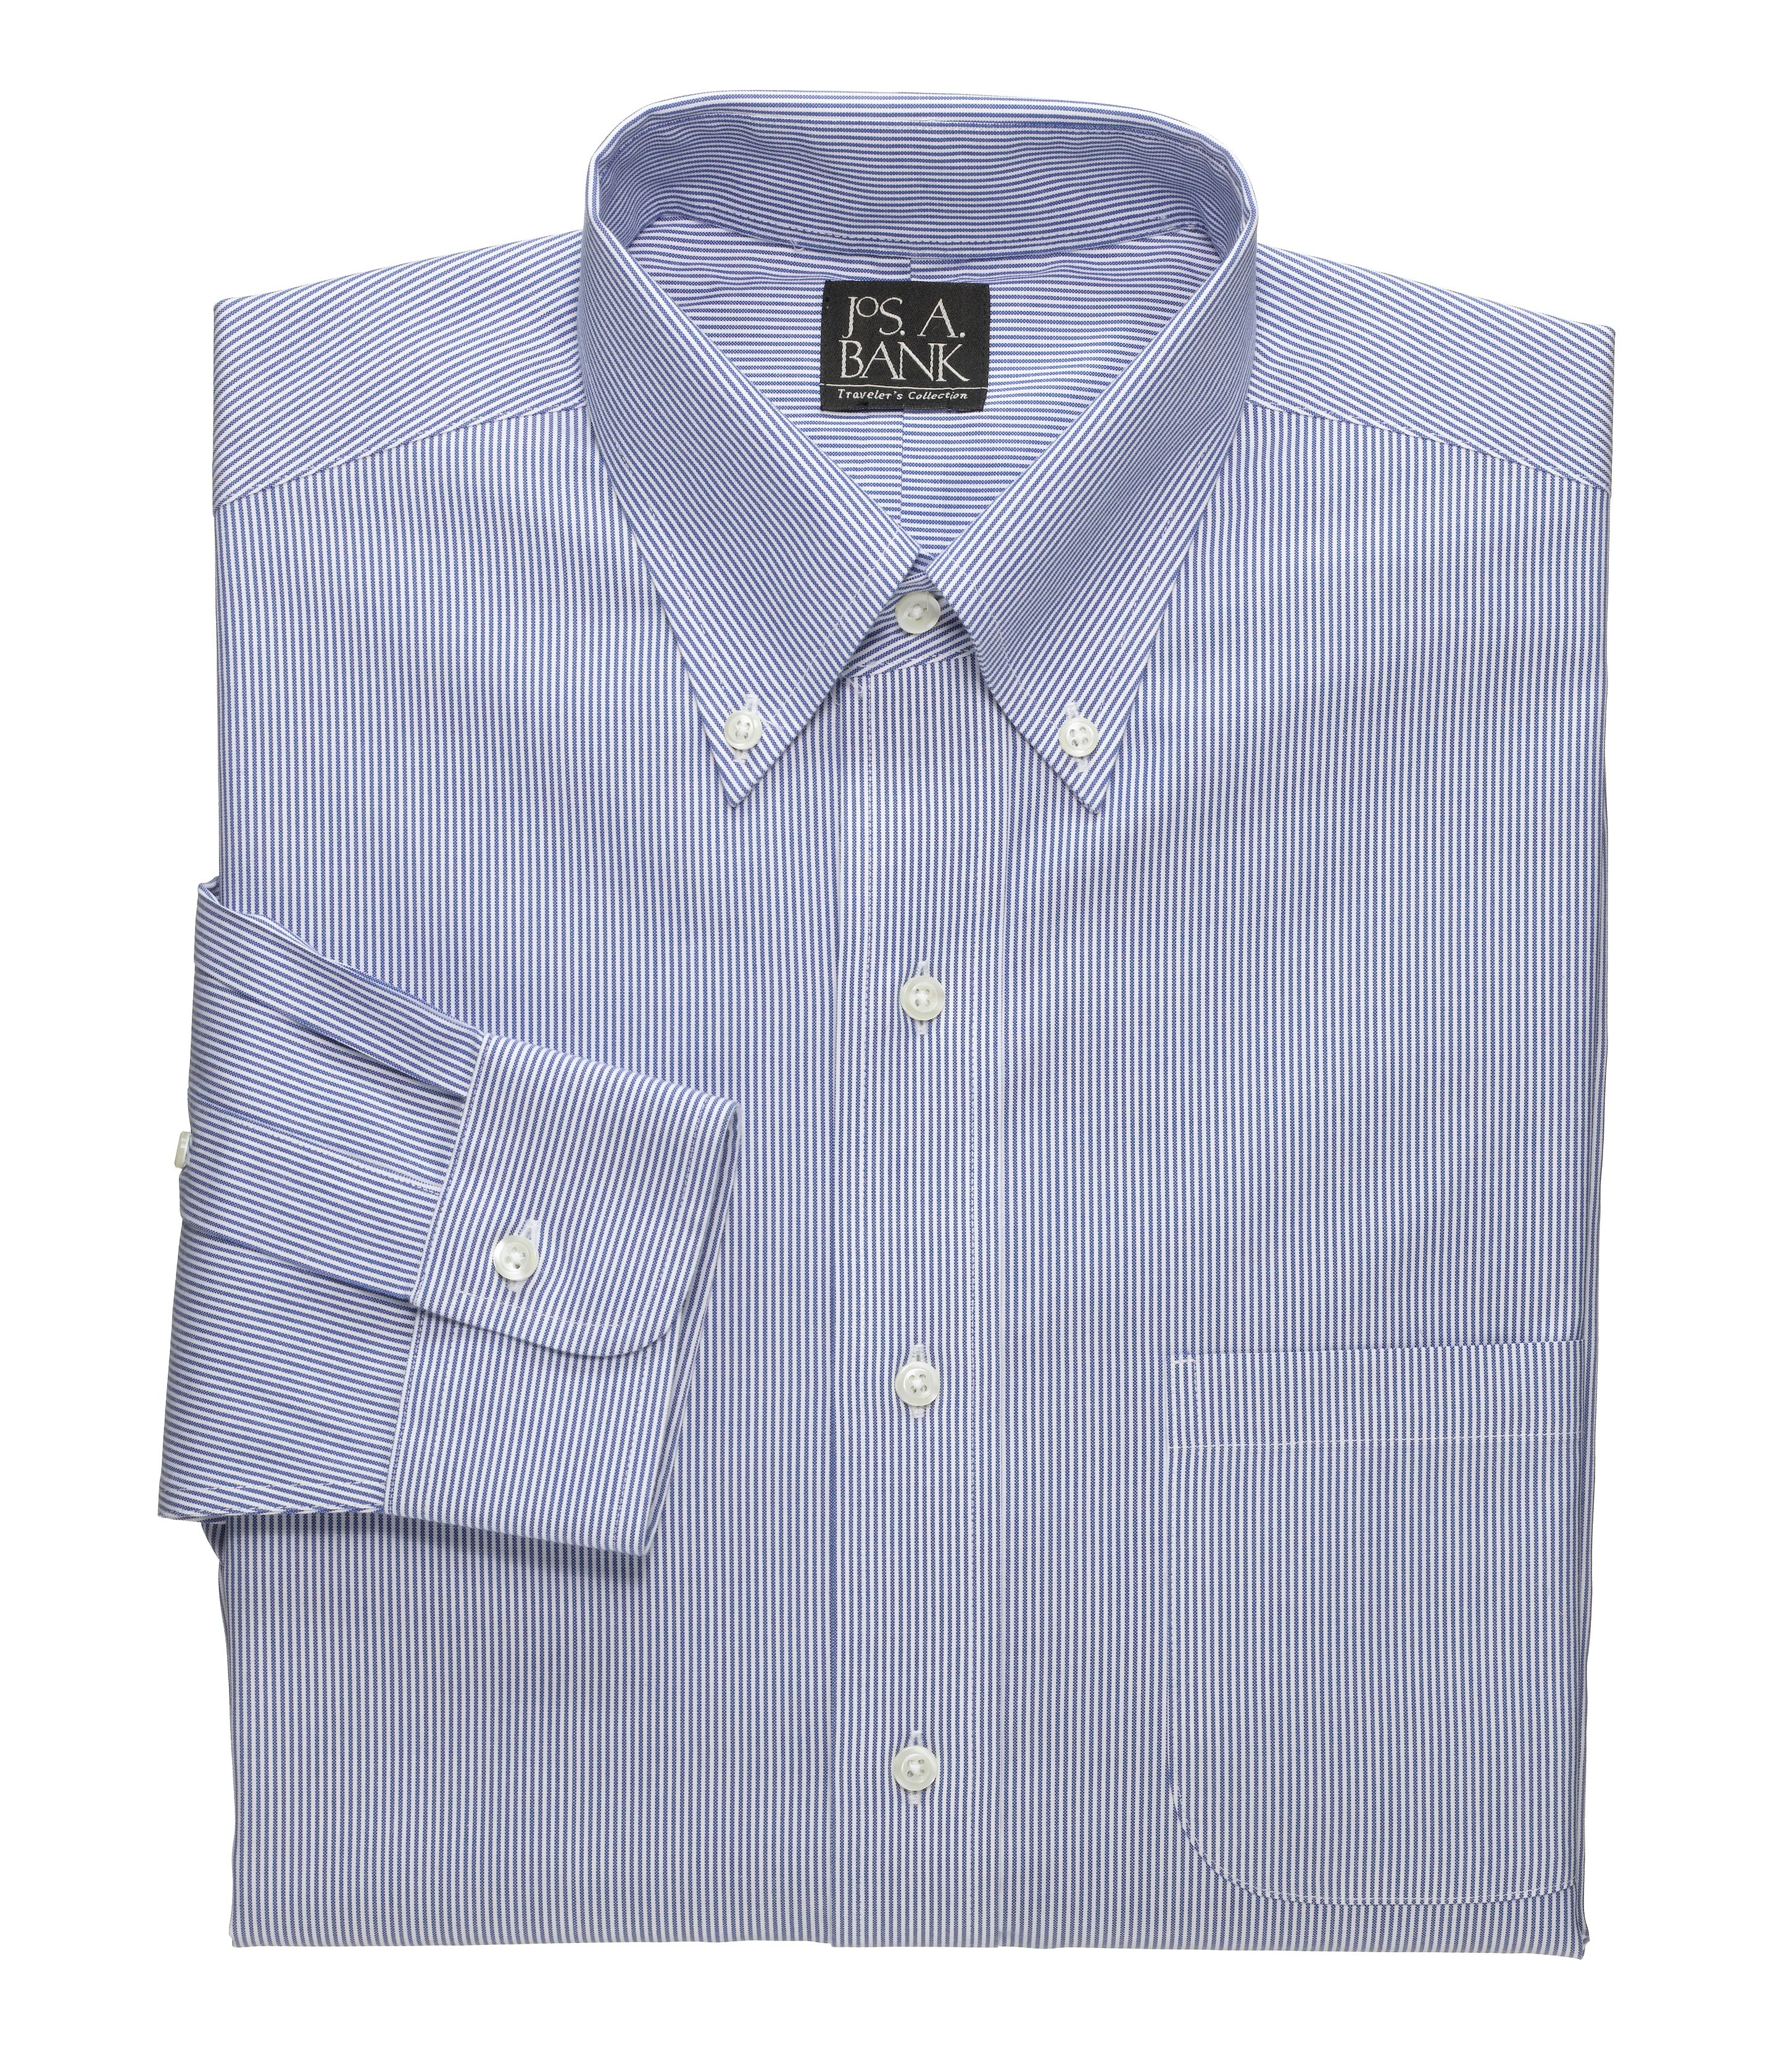 Nero Amazon Moda Uomo Abbigliamento Top e t-shirt T-shirt Polo 17" Neck 37" Sleeve Tailored Fit Button-collar Pattern Non-iron Dress Shirt Camicia 